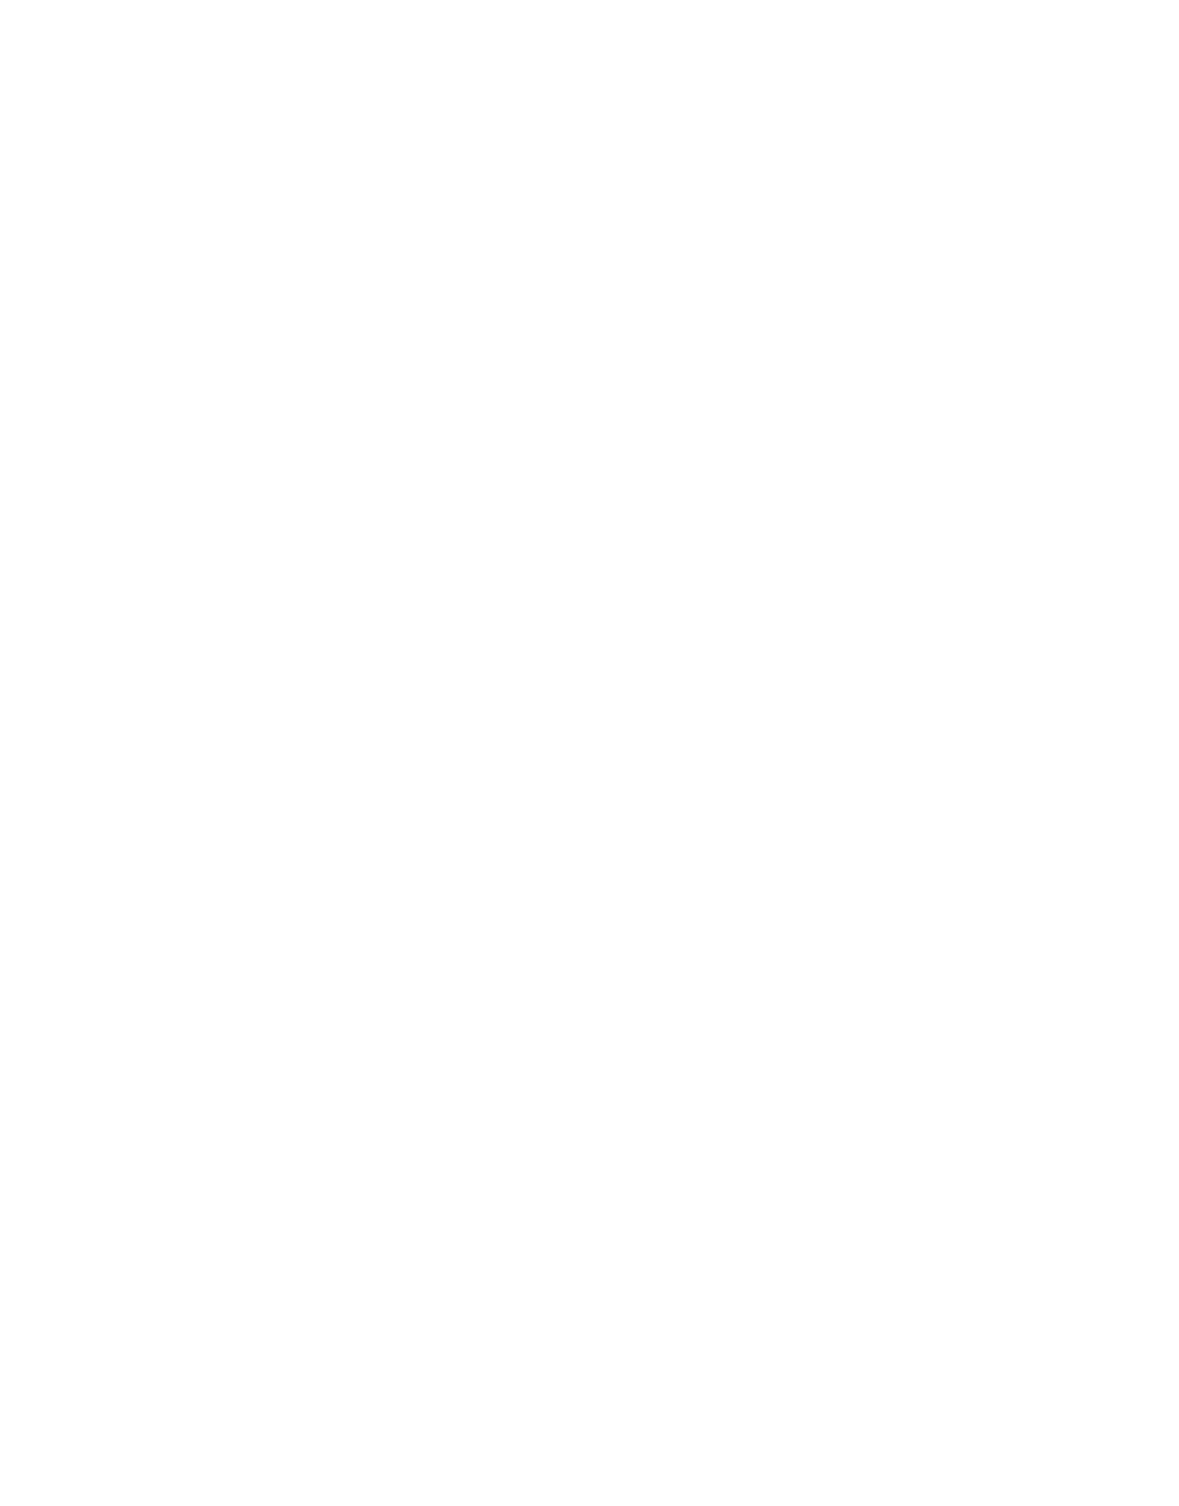 Playstudios logo pour fonds sombres (PNG transparent)